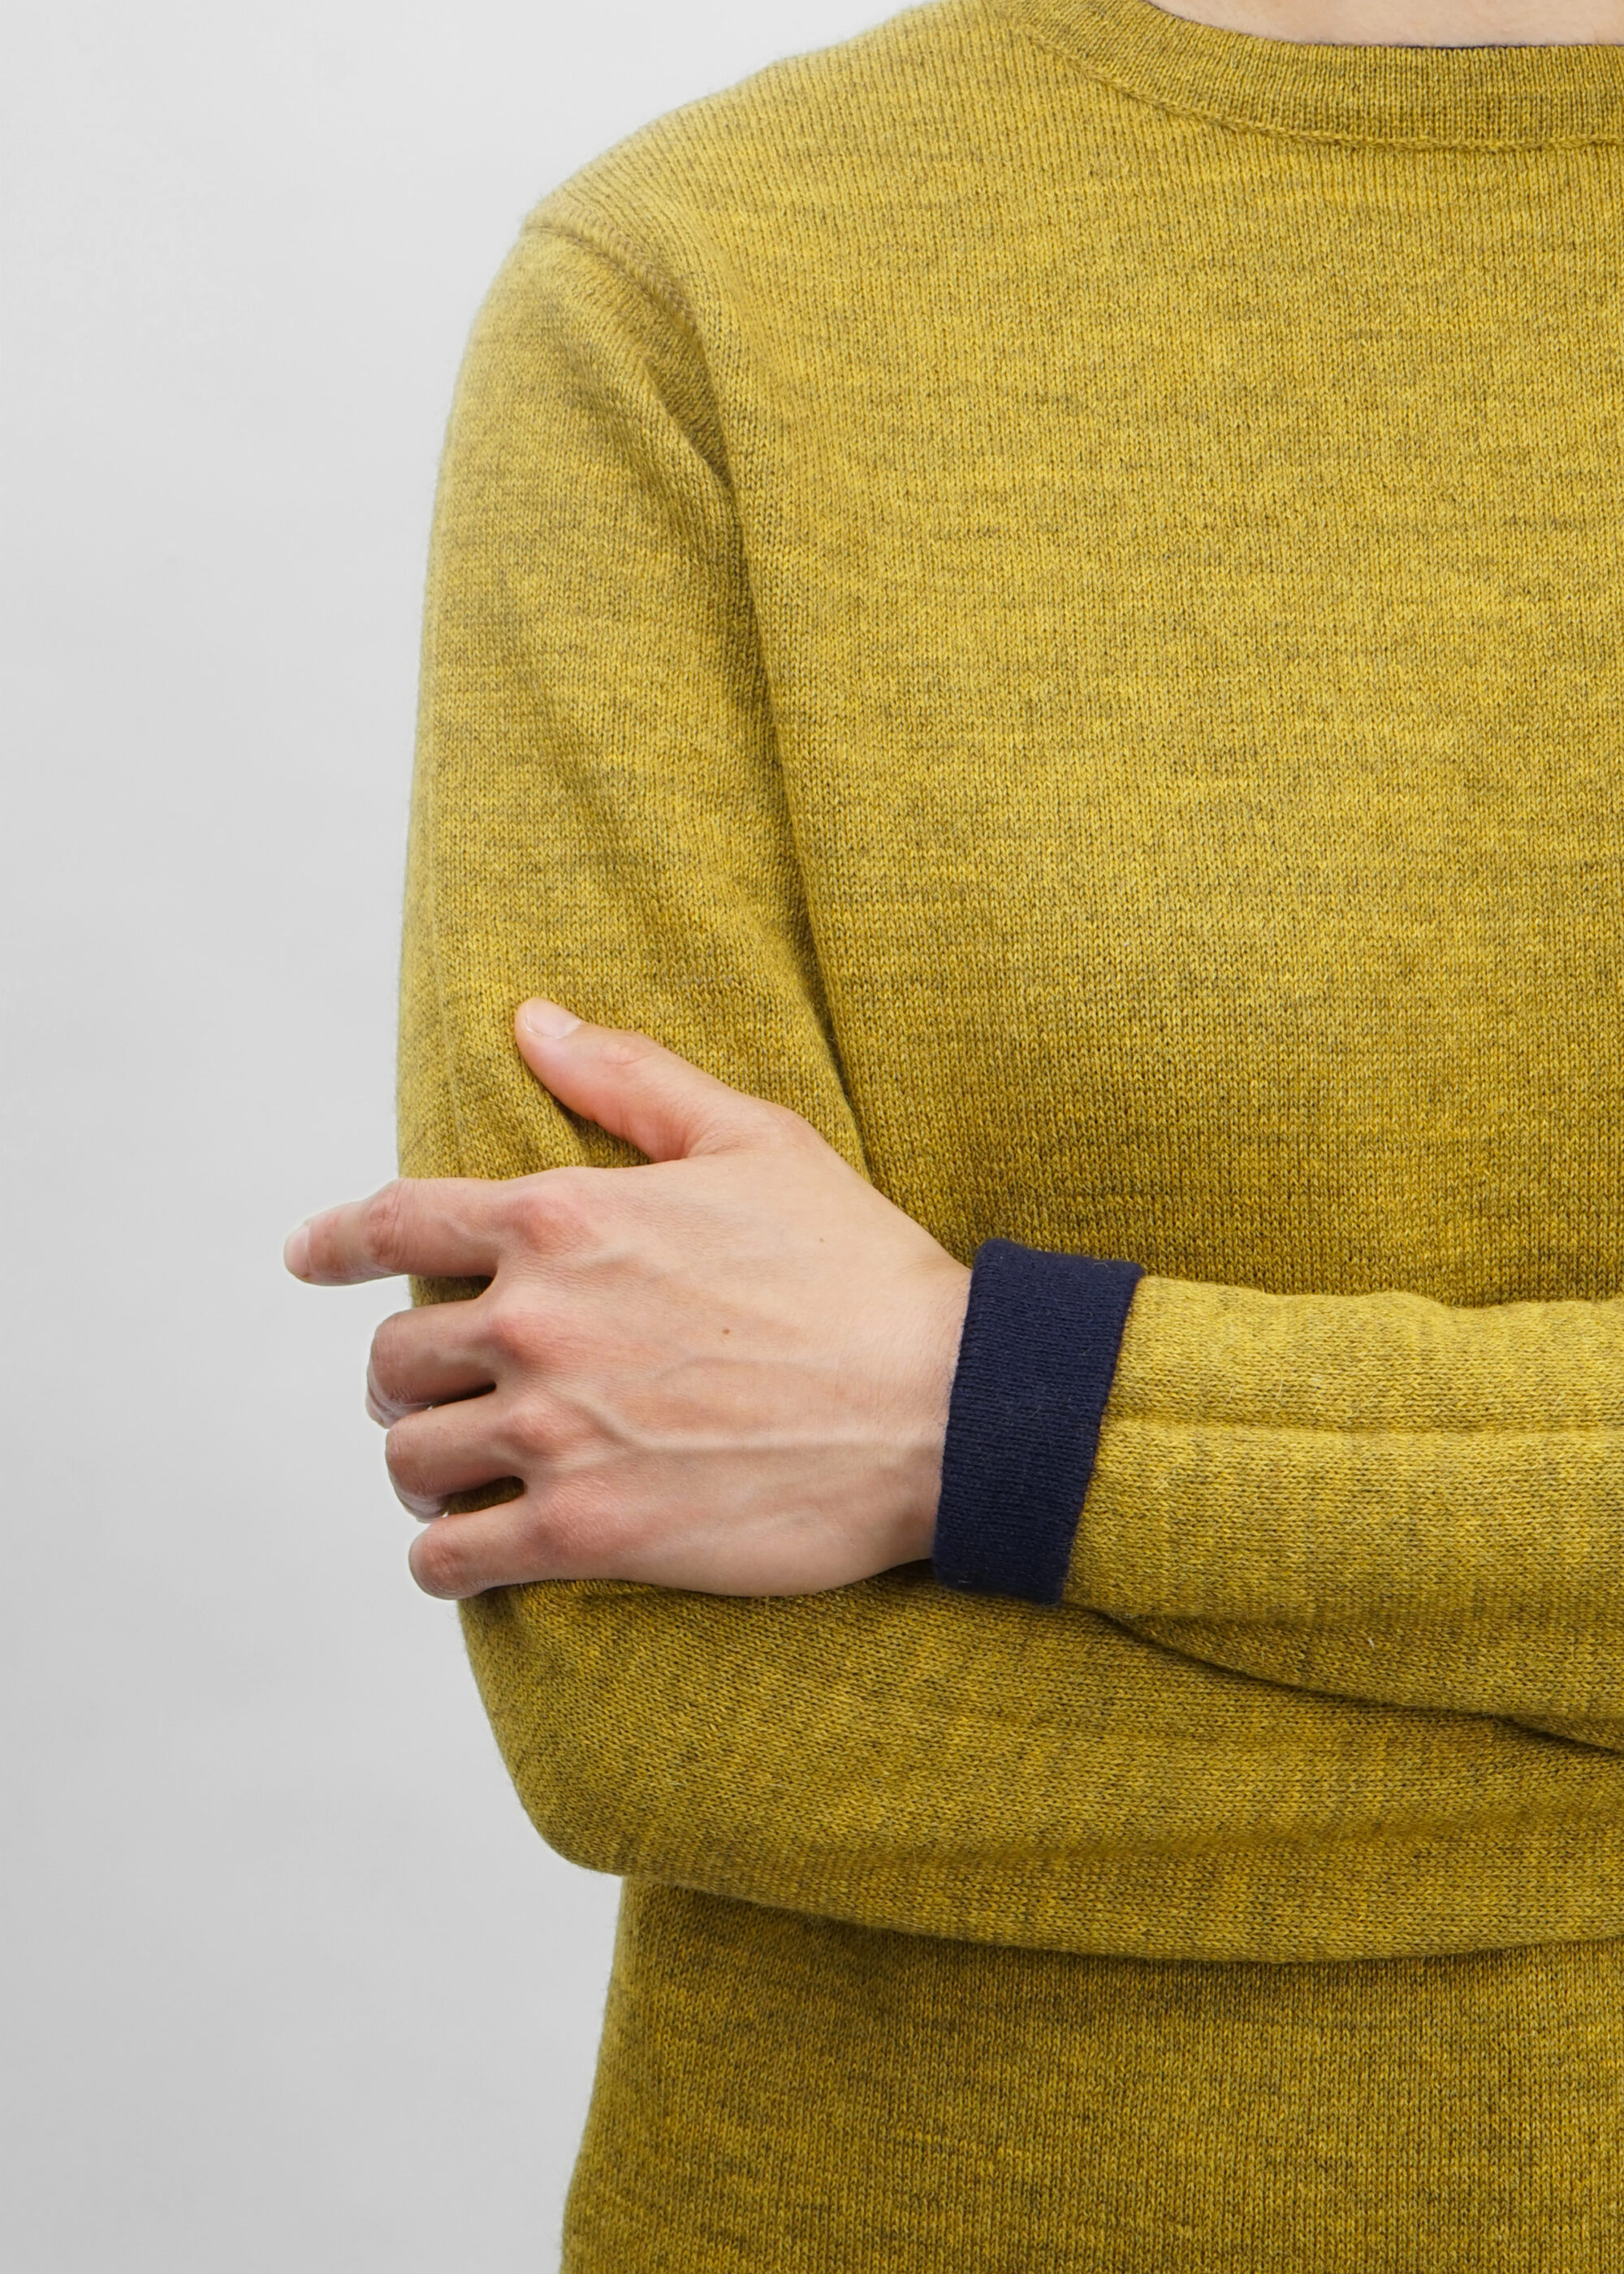 Product image for »Blauaras Mustard« Reversible Sweater Baby Alpaca | Navy Yellow